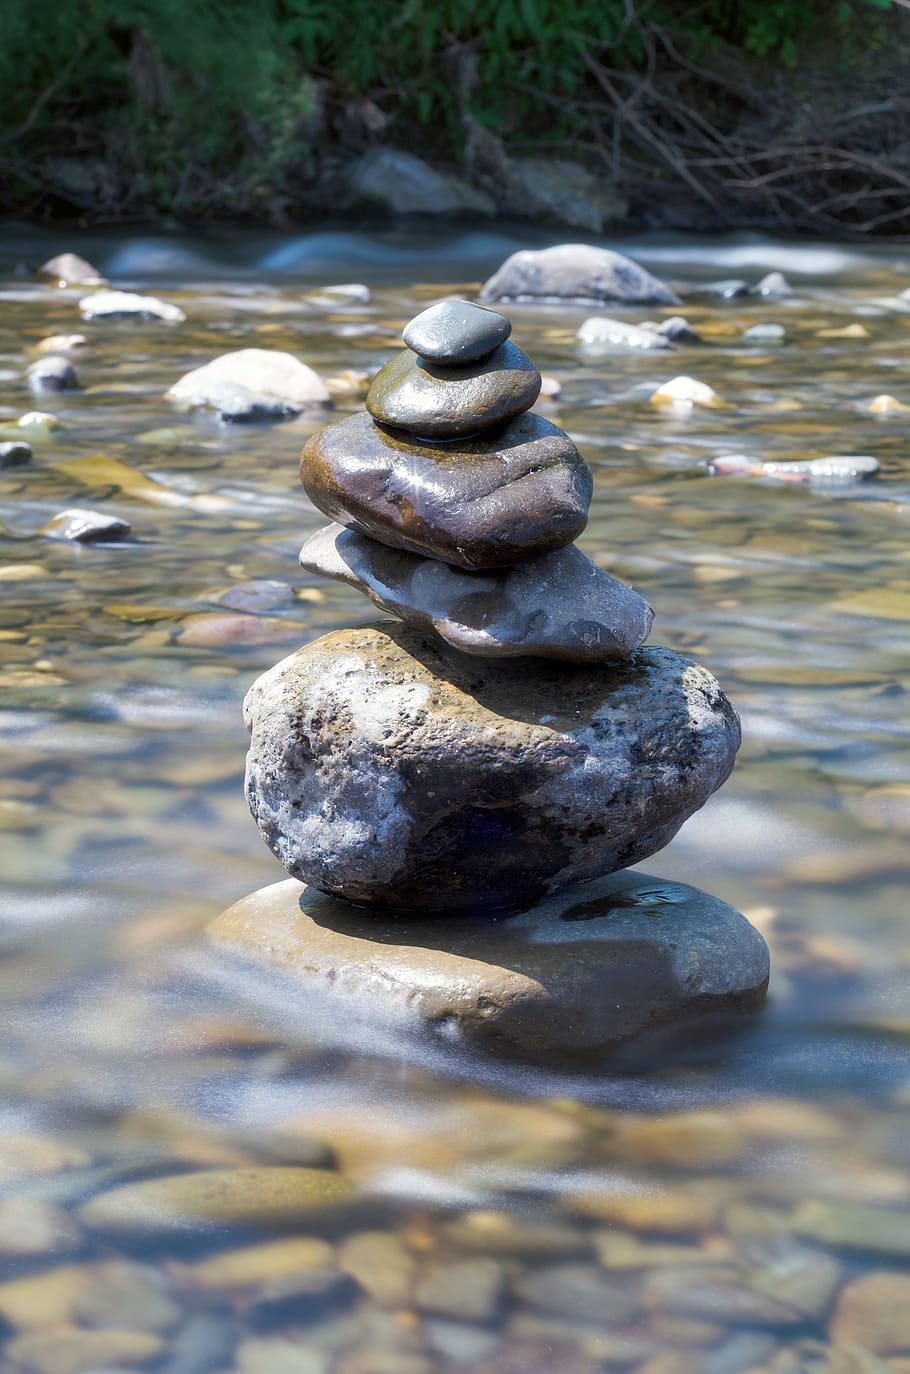 Stone, Rocks, Pebbles, Stones, Water, stones water, balance, stone - object, zen-like, stack